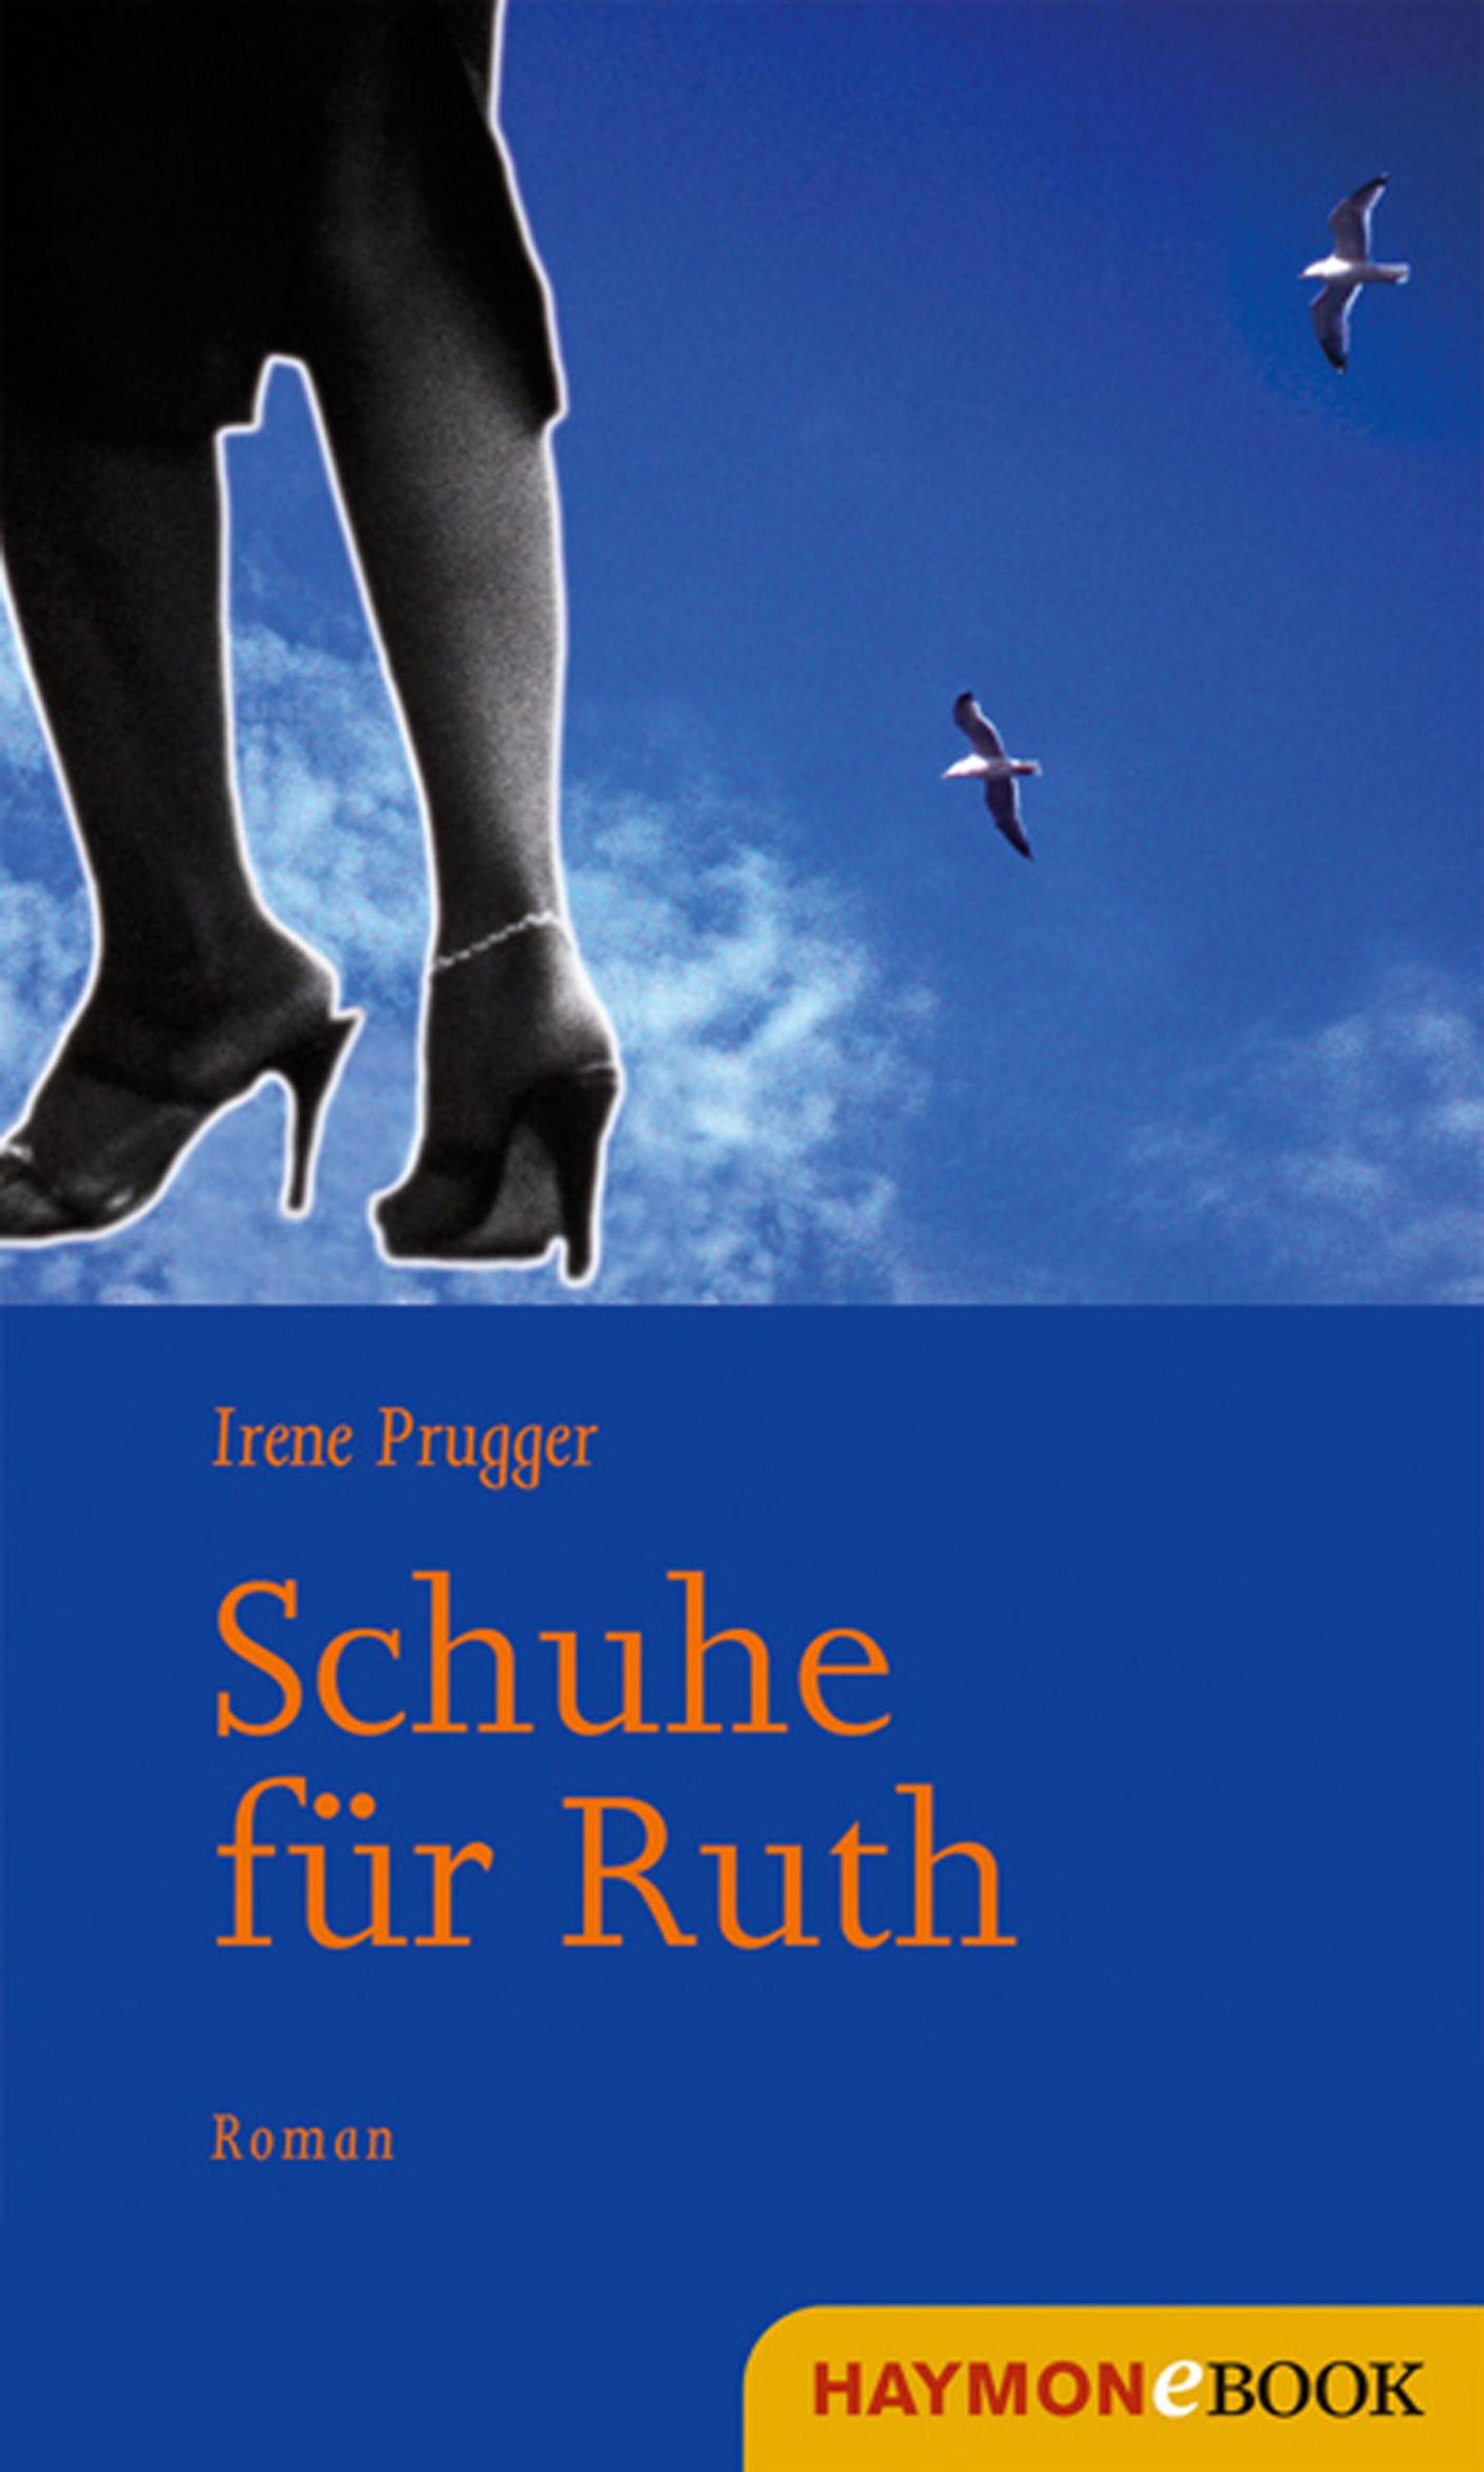 Schuhe für Ruth eBook v. Irene Prugger | Weltbild